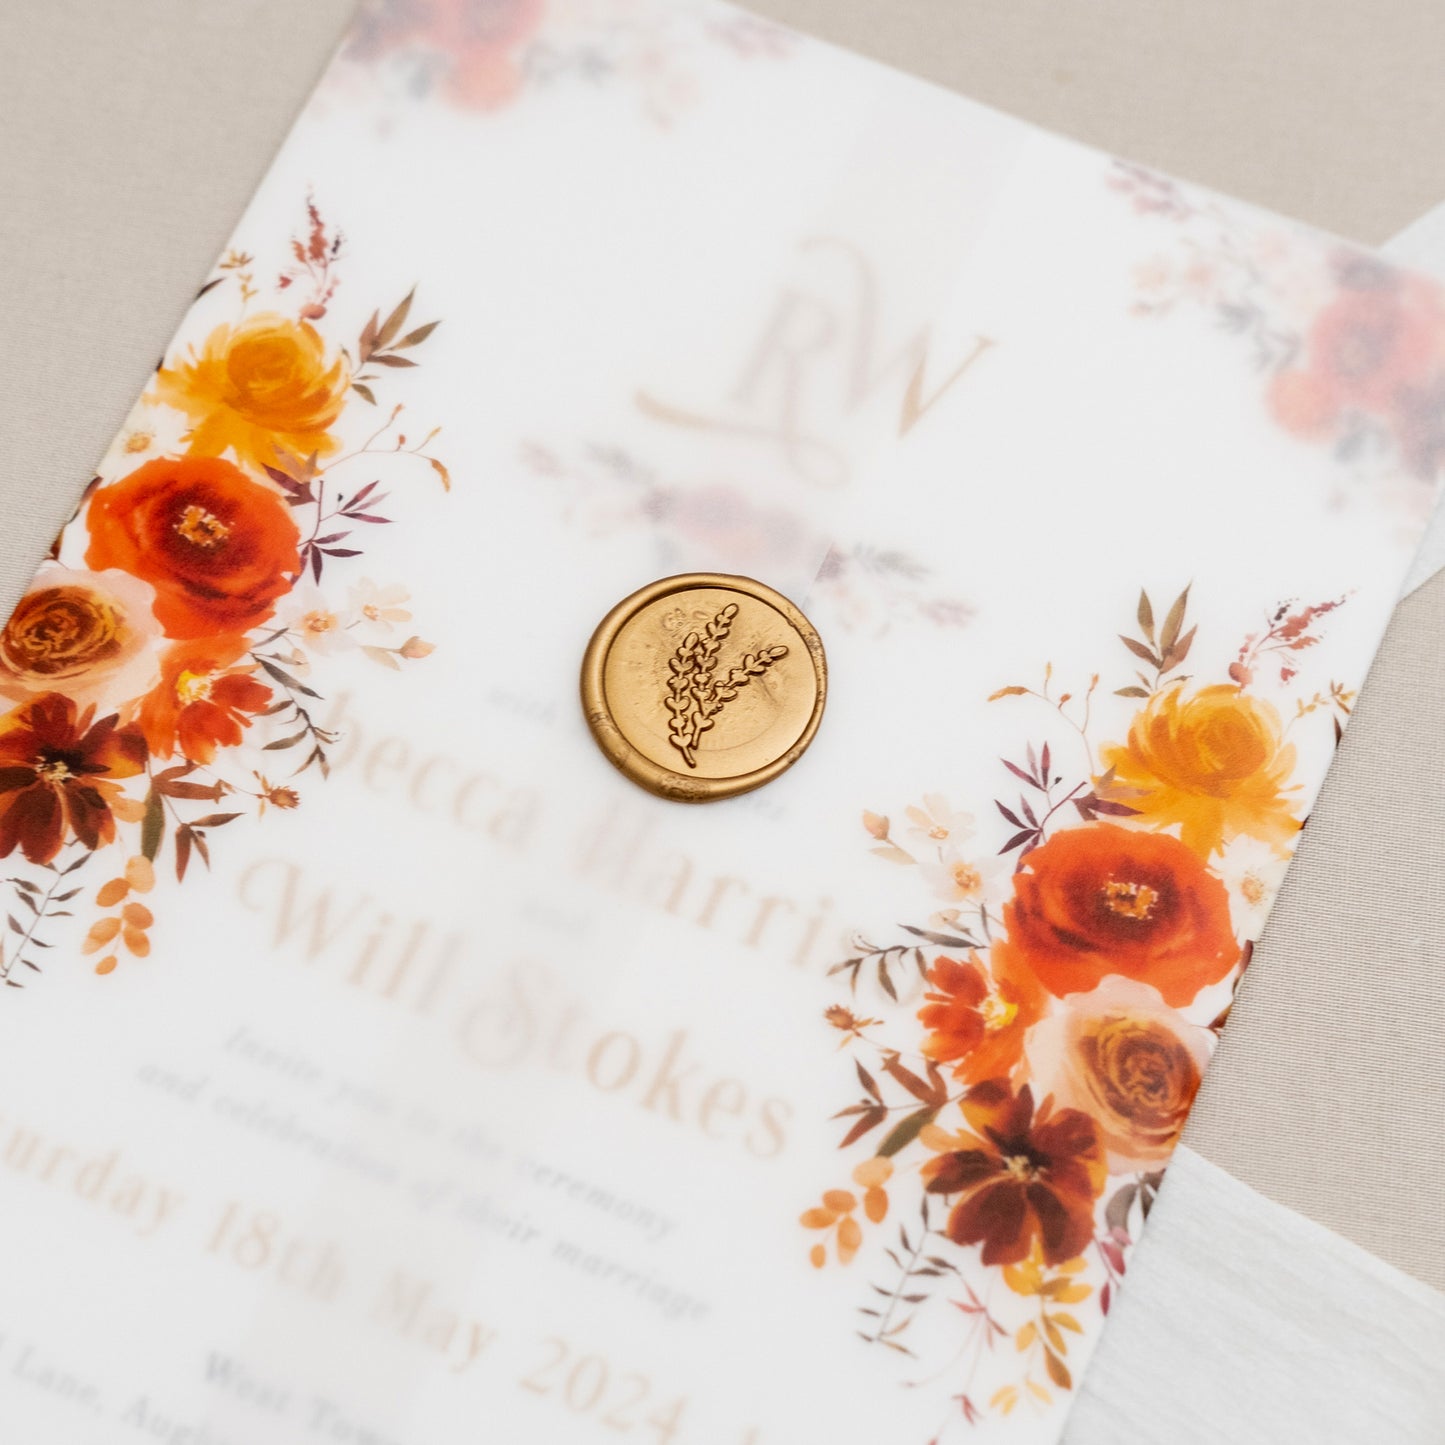 Burnt Orange Wedding Invitation With Vellum Wrap And Gold Wax Seal